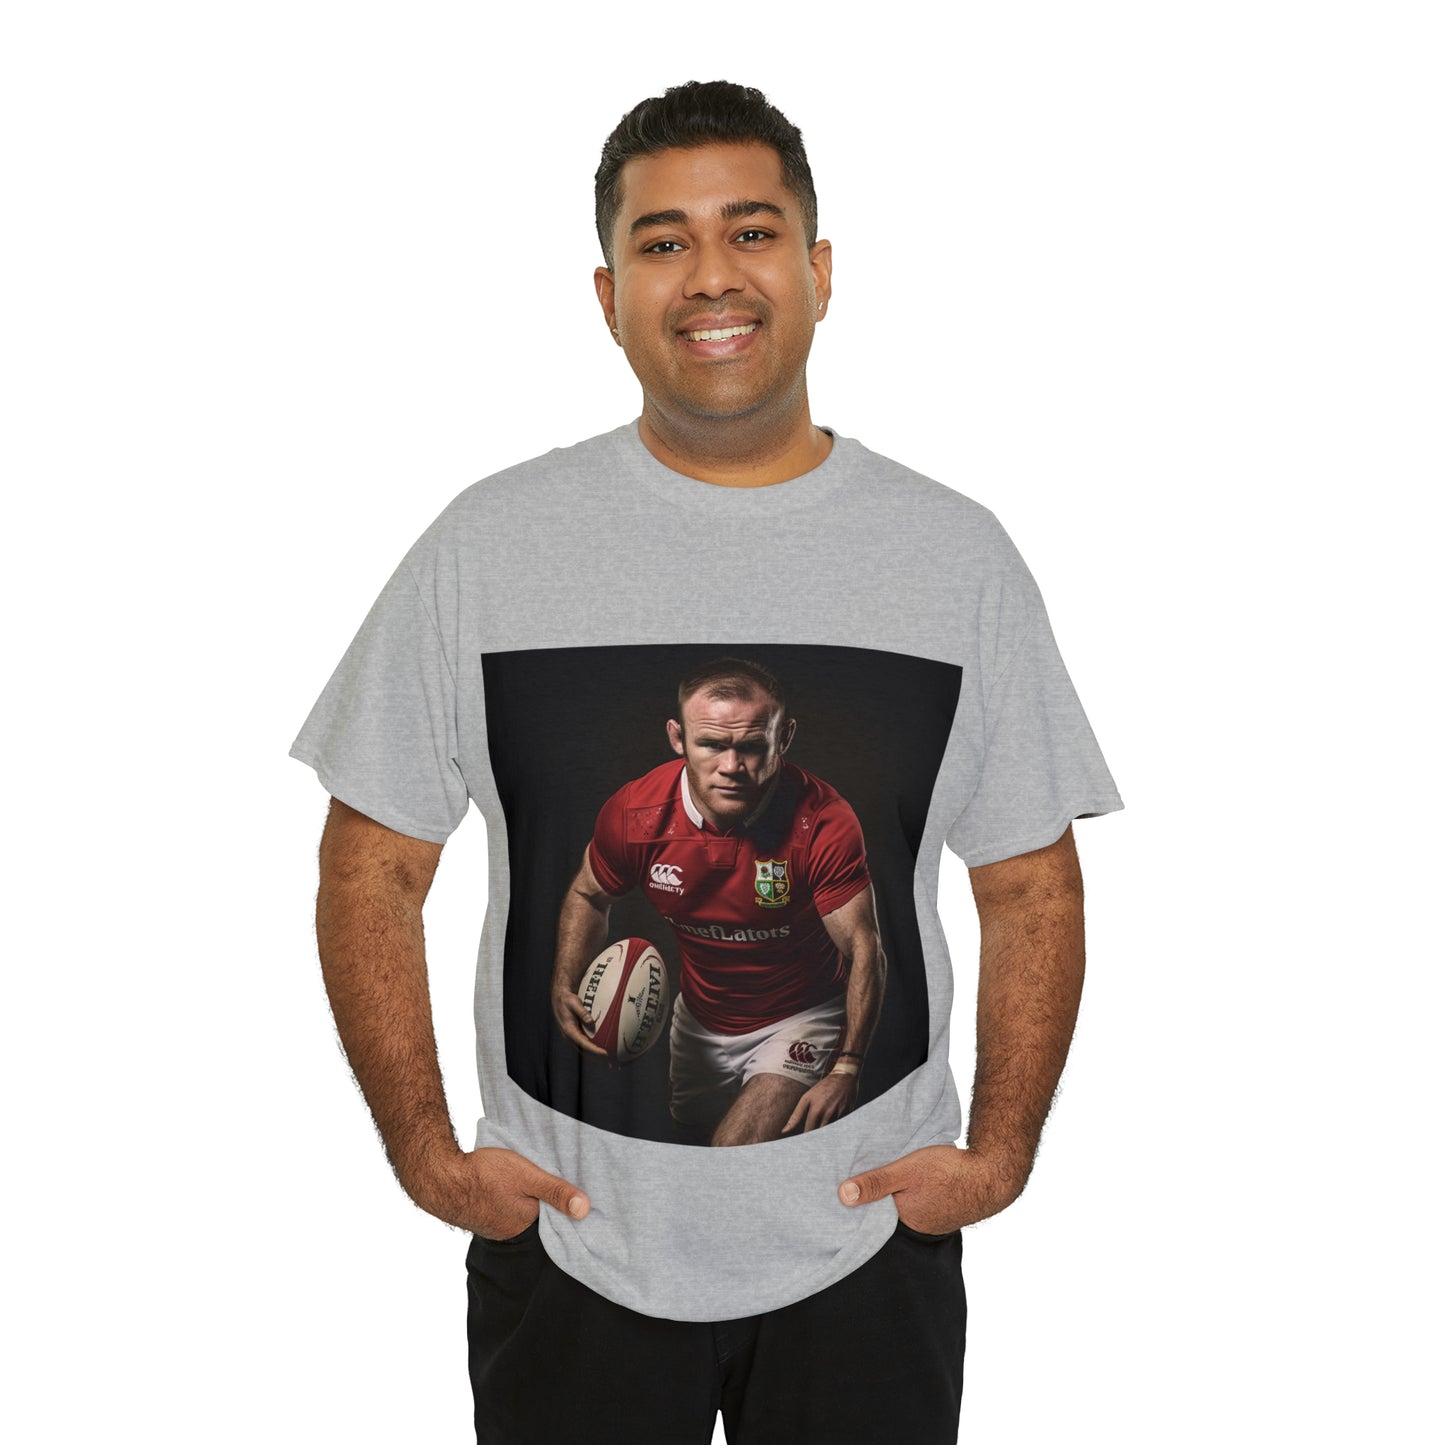 Ready Rooney - light shirts